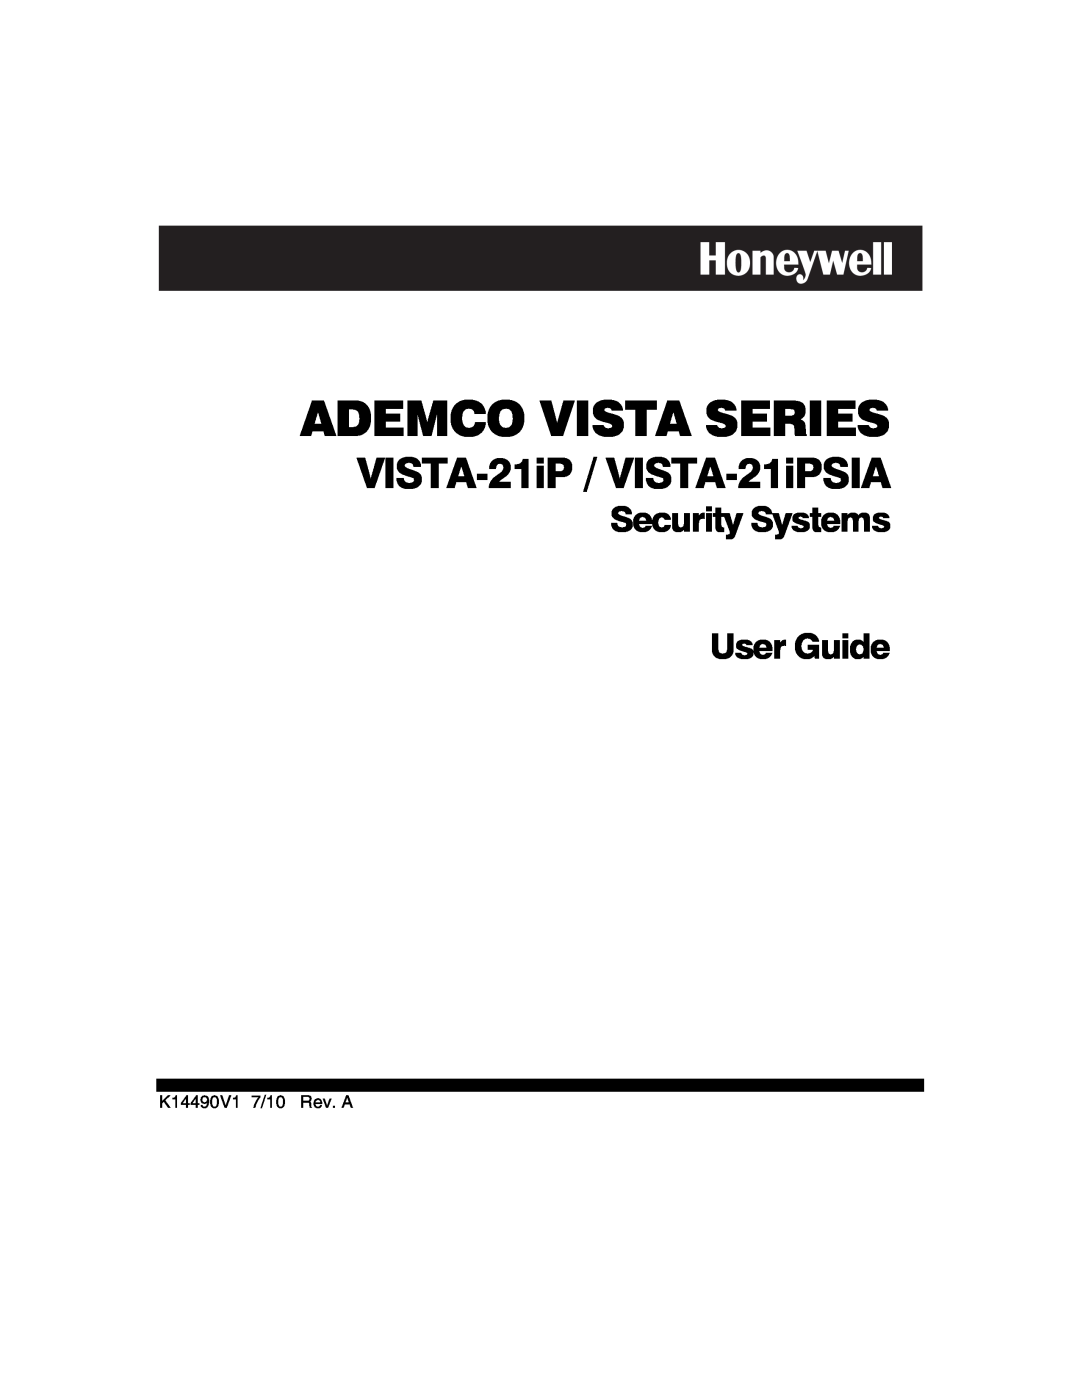 Honeywell VISTA-21IPSIA manual Ademco Vista Series, VISTA-21iP / VISTA-21iPSIA, Security Systems User Guide 